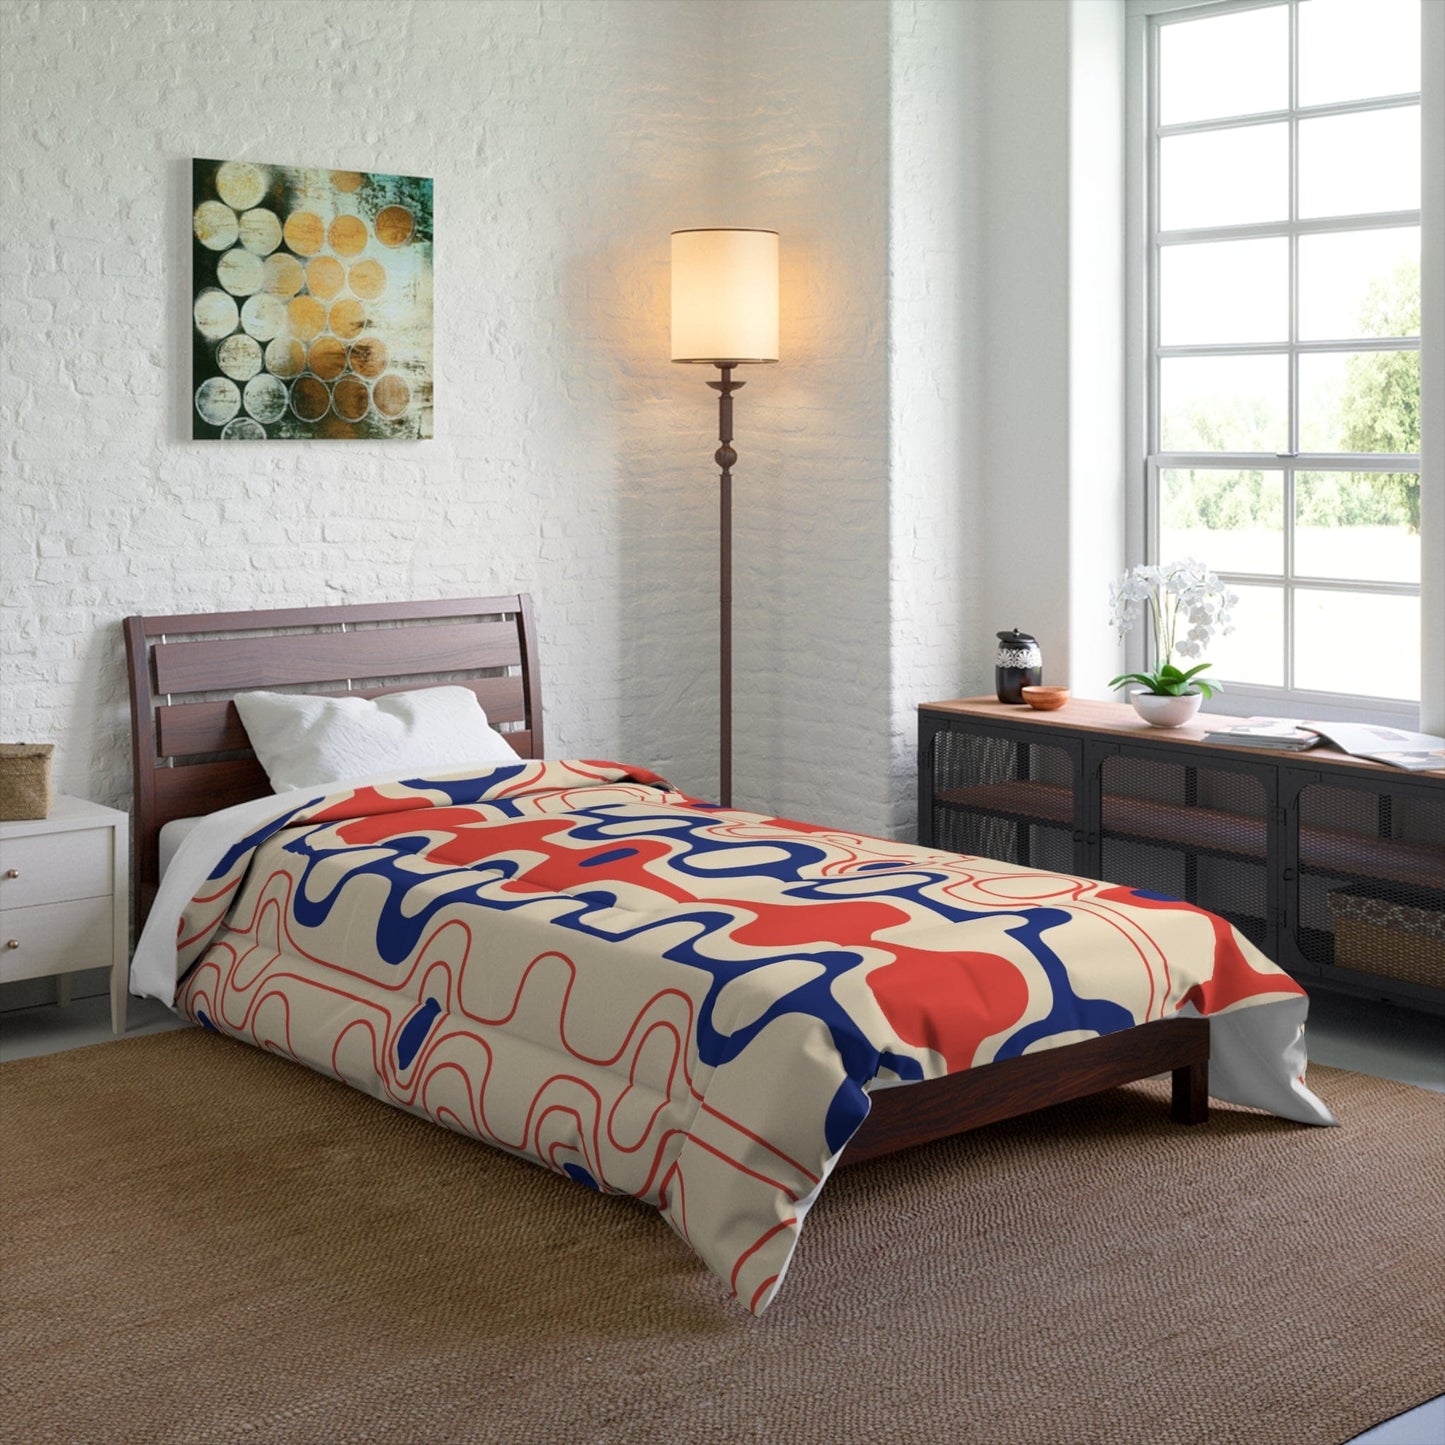 Kate McEnroe New York Retro Geometric Mid Mod Comforter Comforters 68" × 88" 25130963508910690998